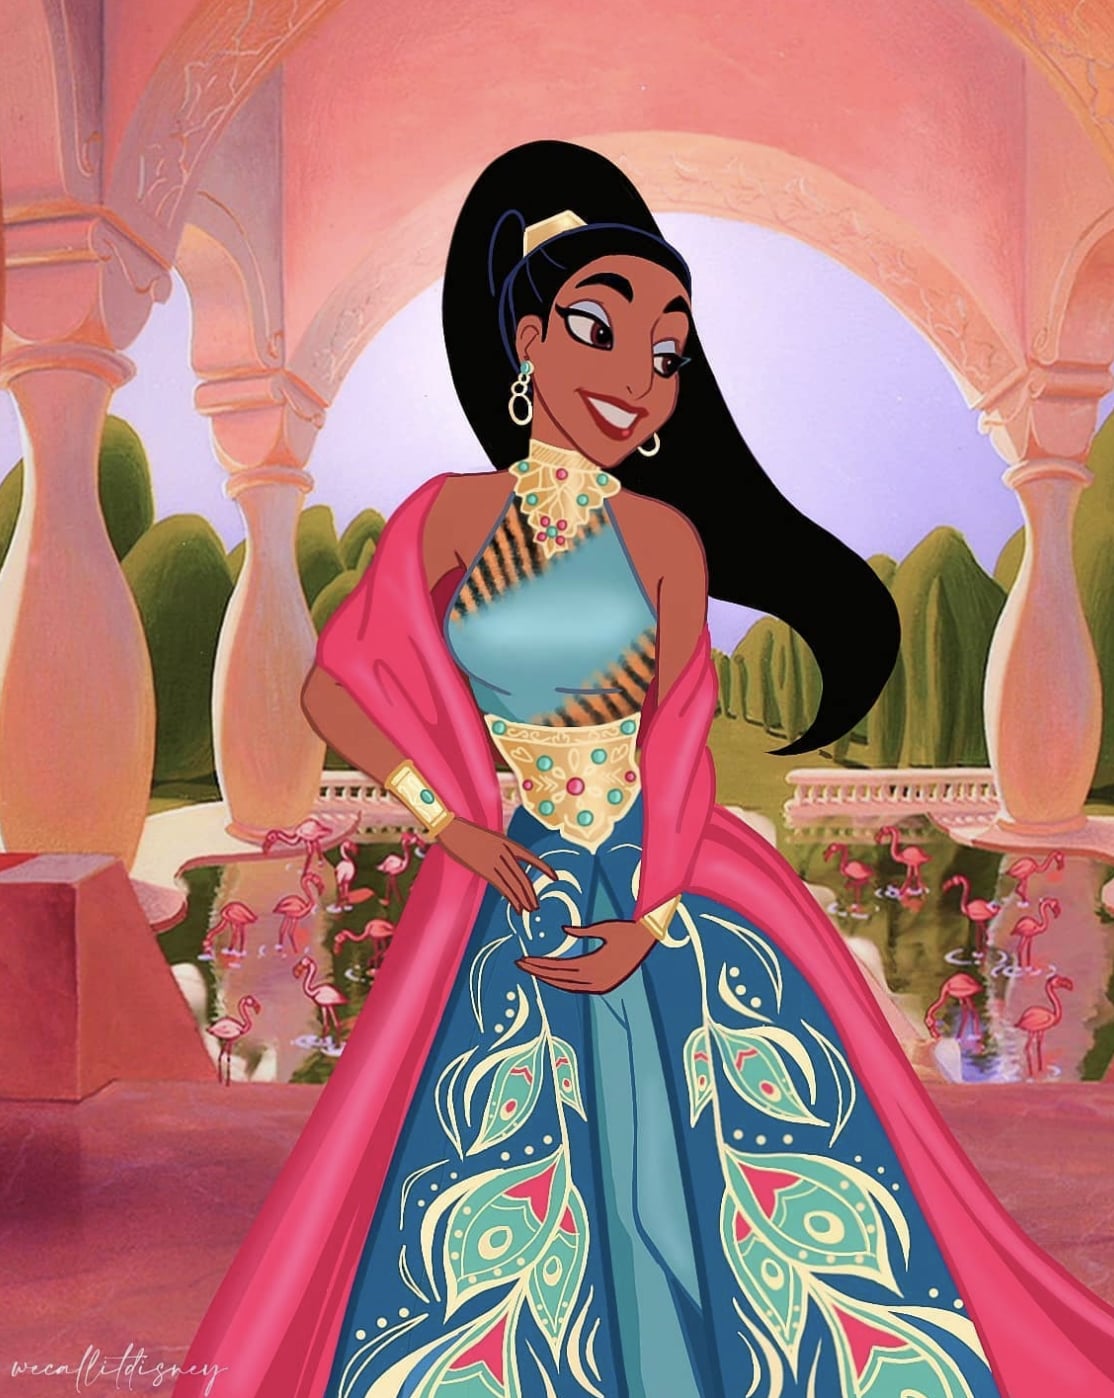 This Artist Gave Disney Princess Dresses a Design Update